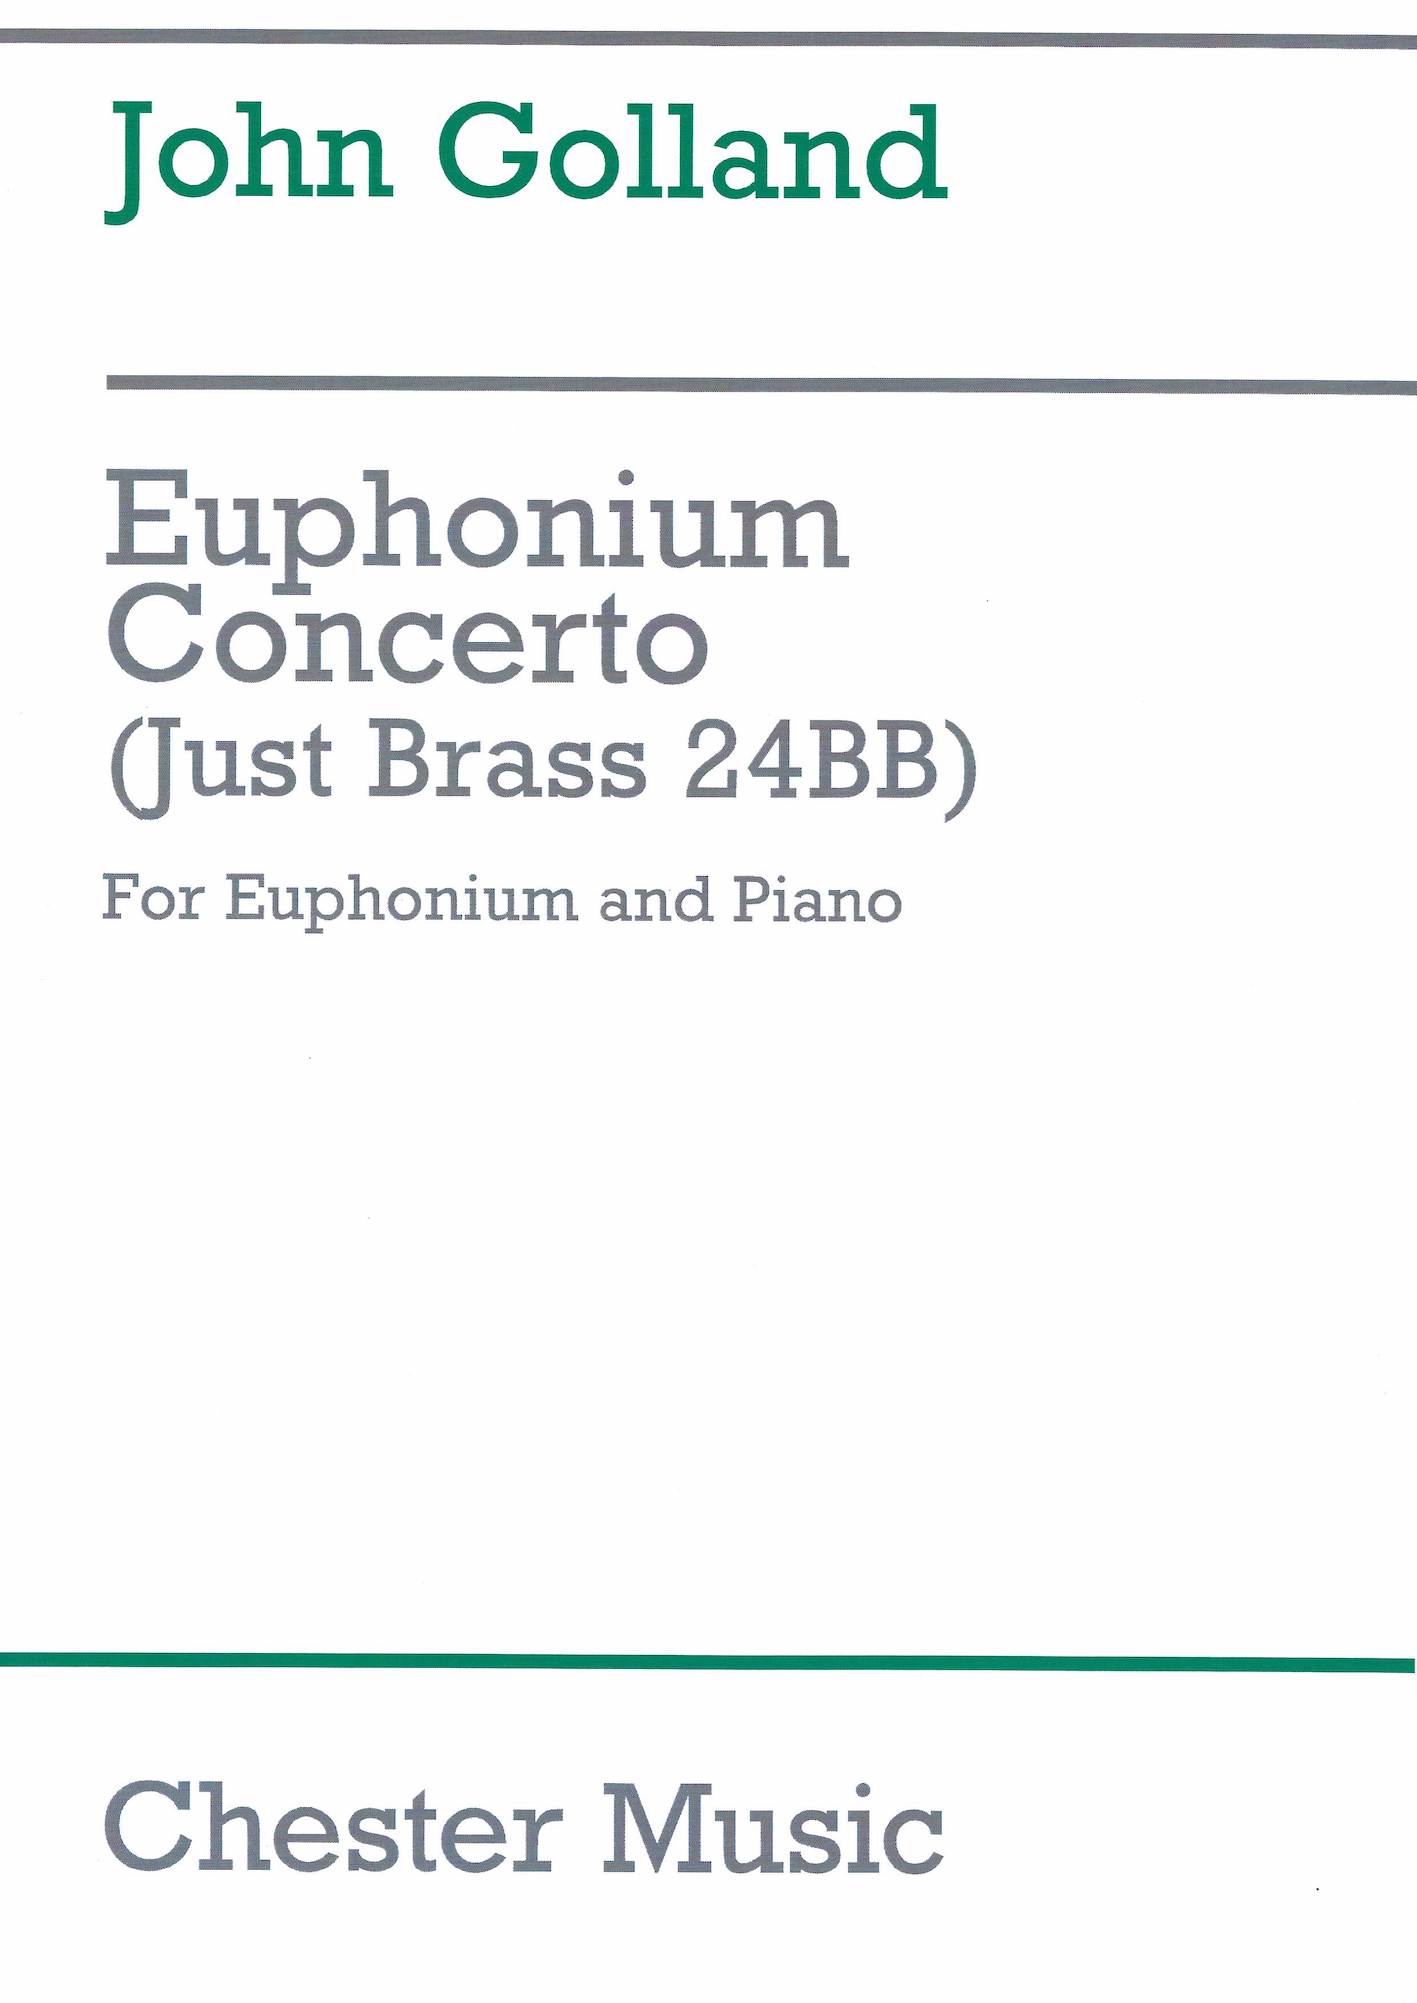 Euphonium Concerto No.1 - John Golland - solo euphonium with piano accompaniment